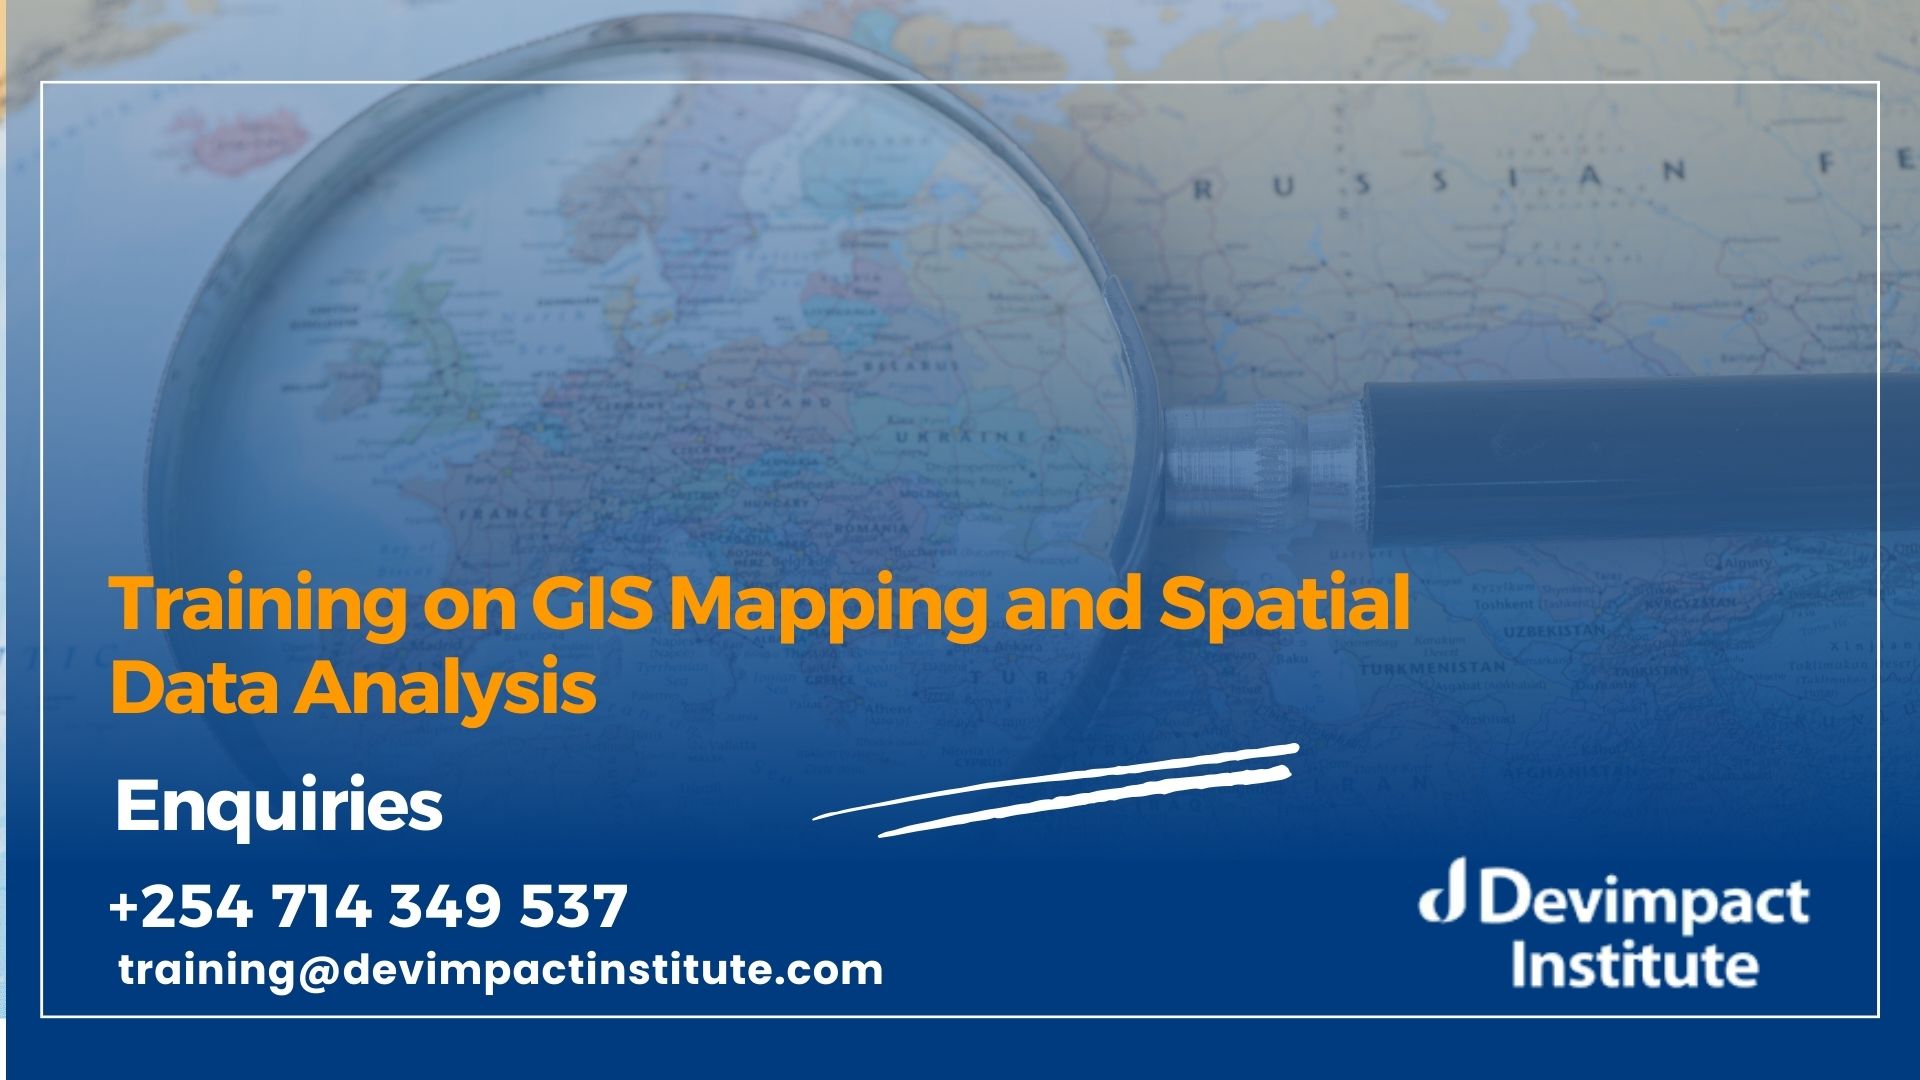 Training on GIS Mapping and Spatial Data Analysis, Devimpact Institute, Nairobi, Kenya